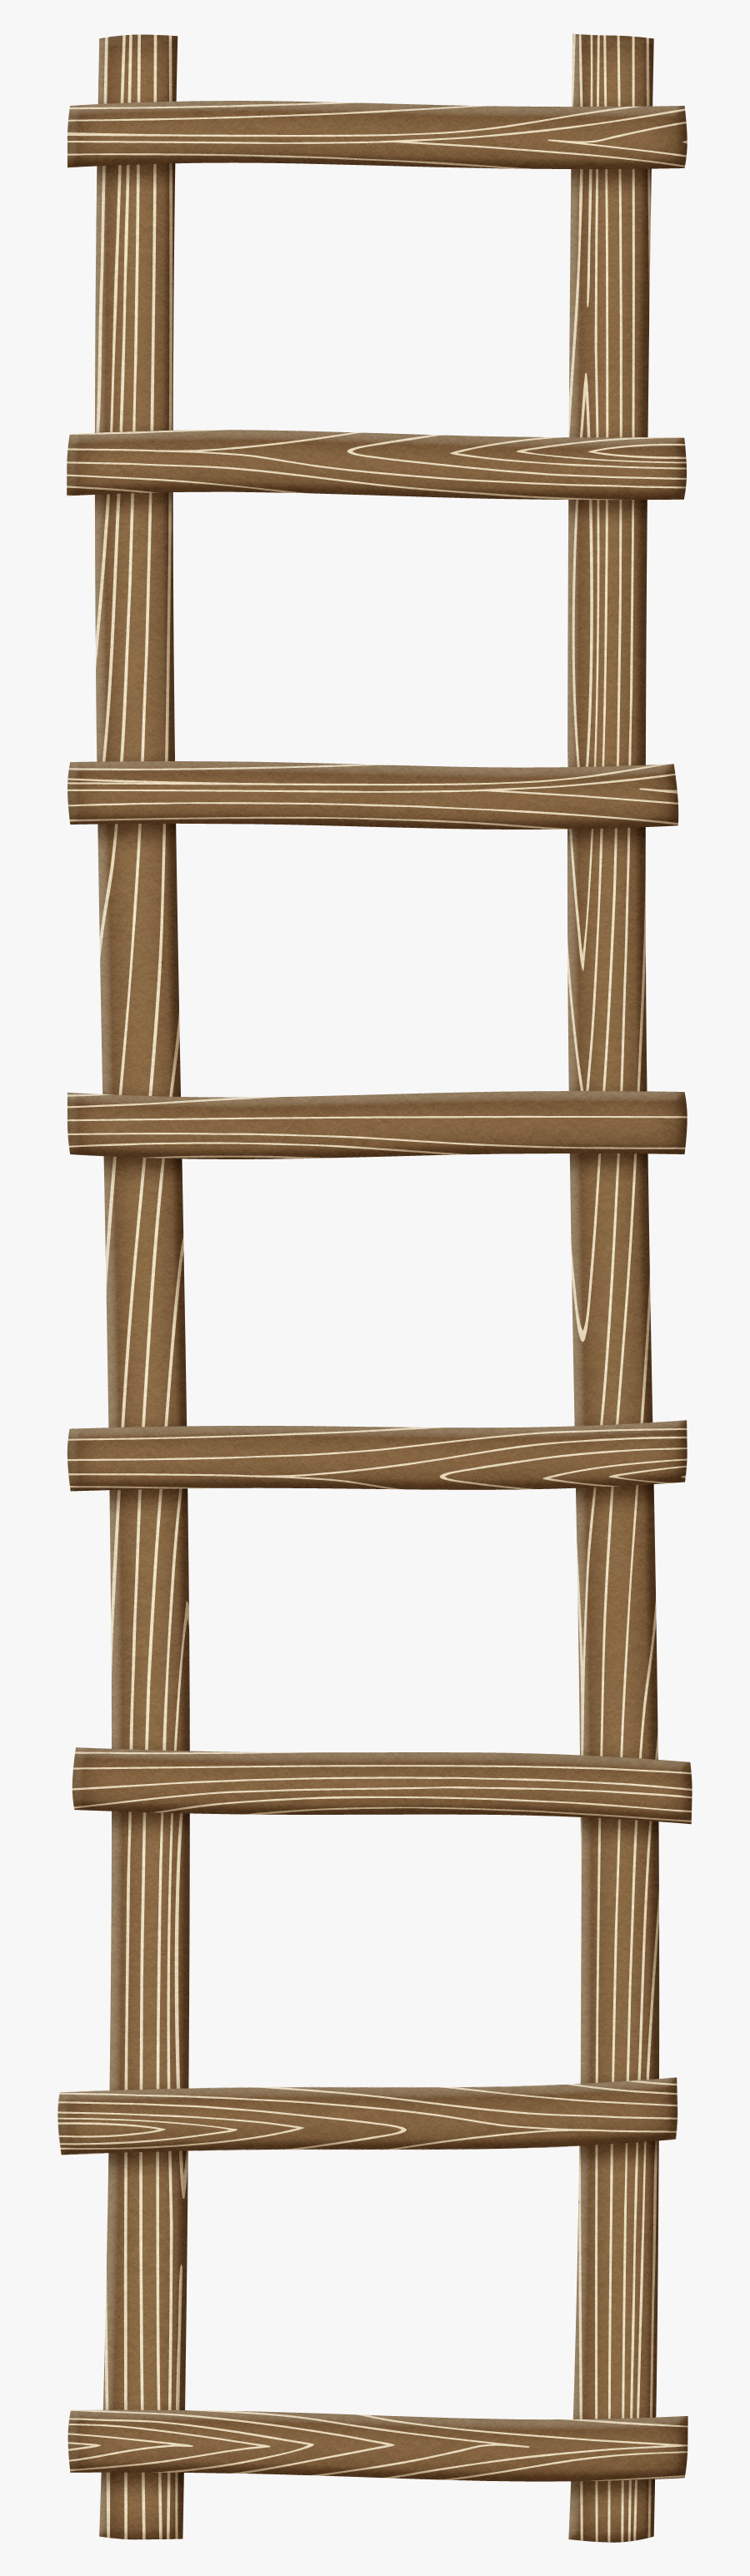 Wood Ladder Png, Transparent Clipart